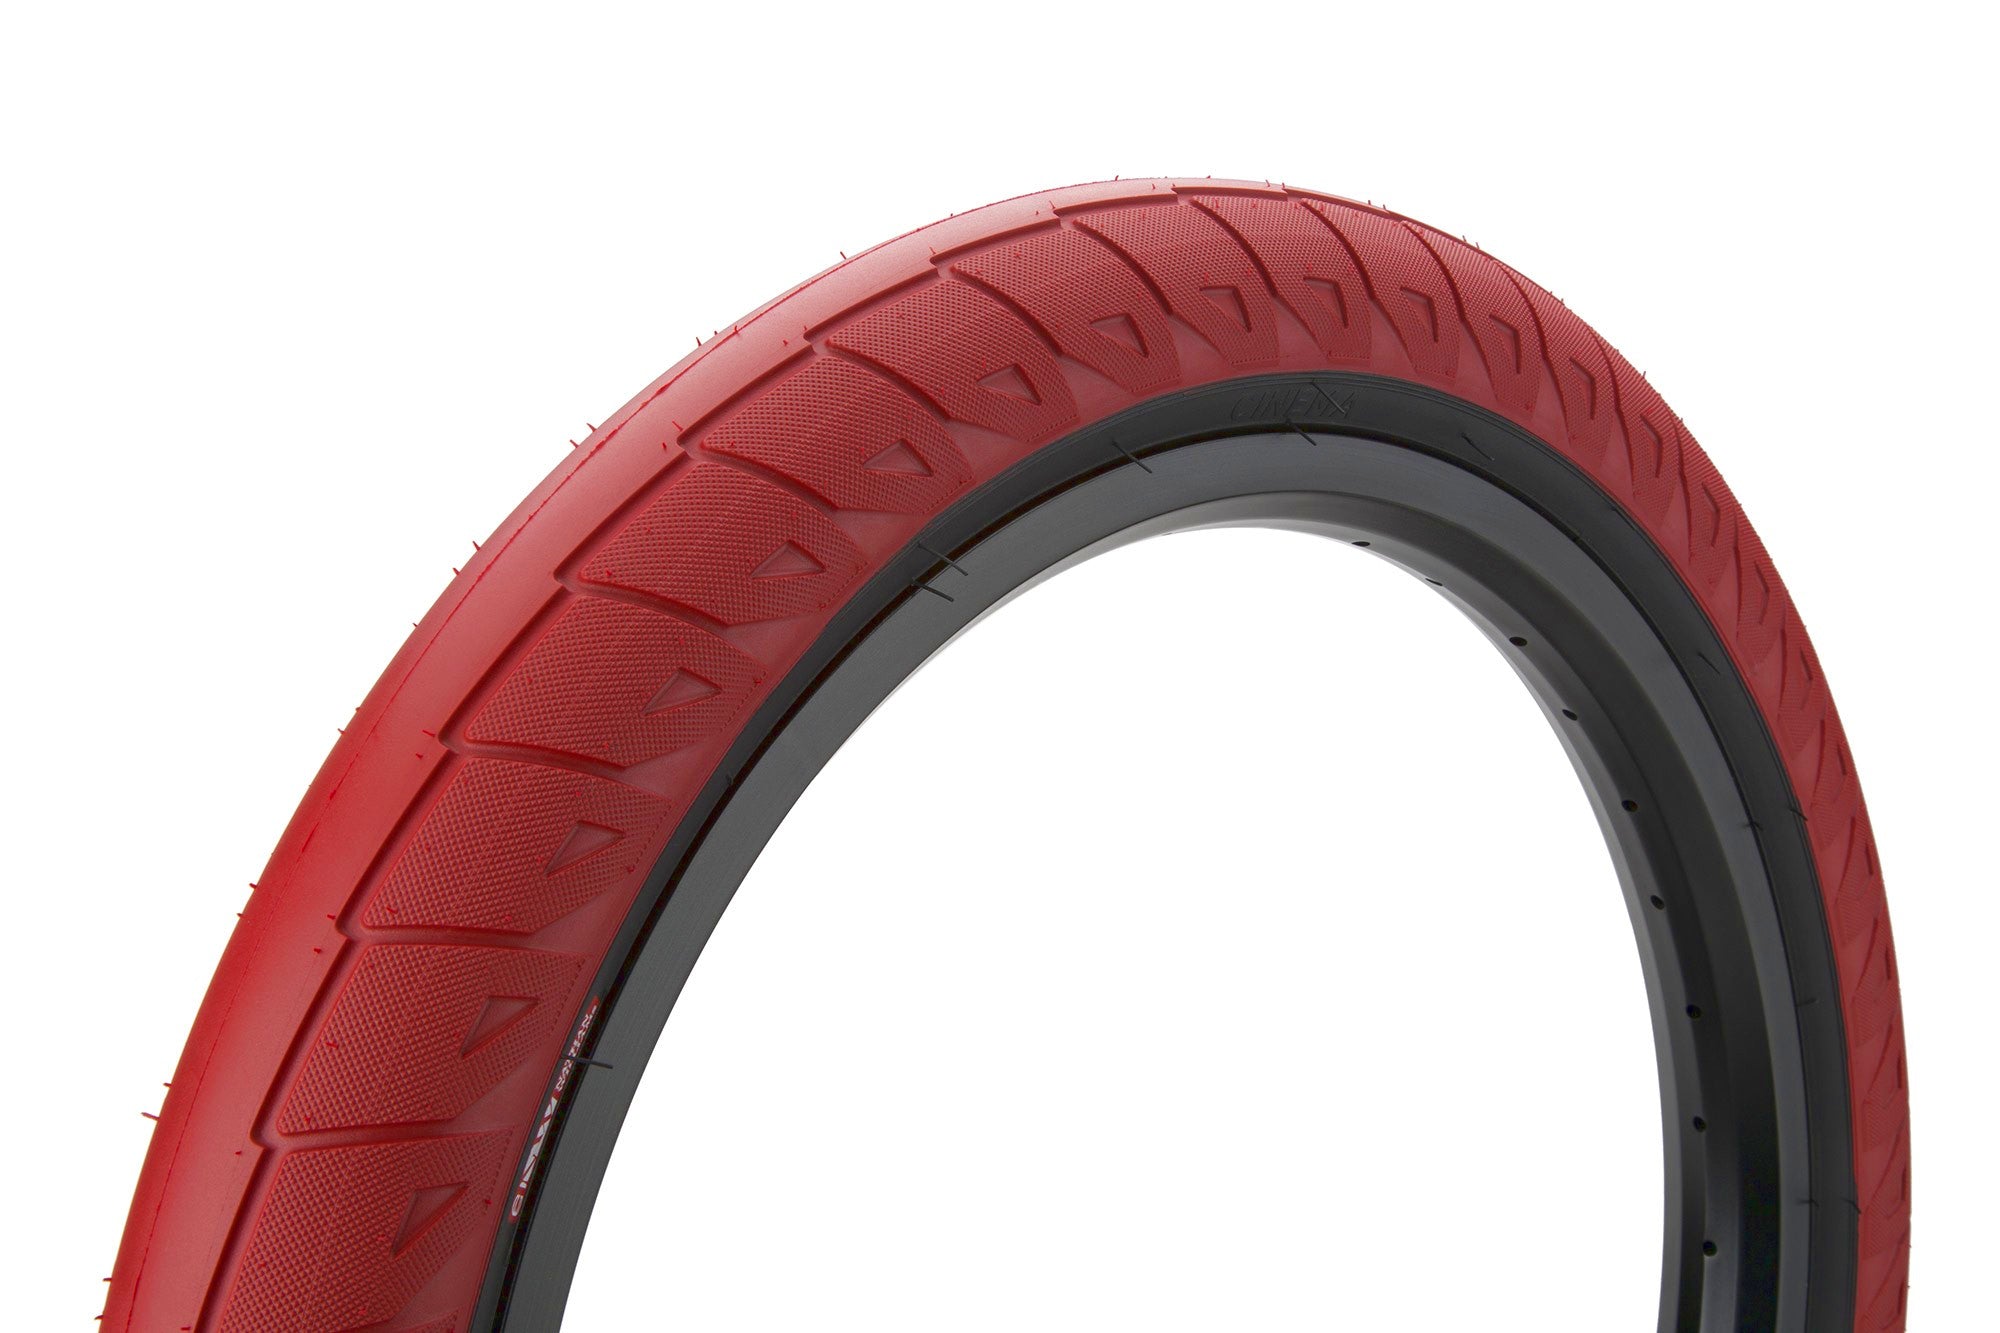 20x2.50 Cinema Williams BMX tire - Red w/ Black Sidewall